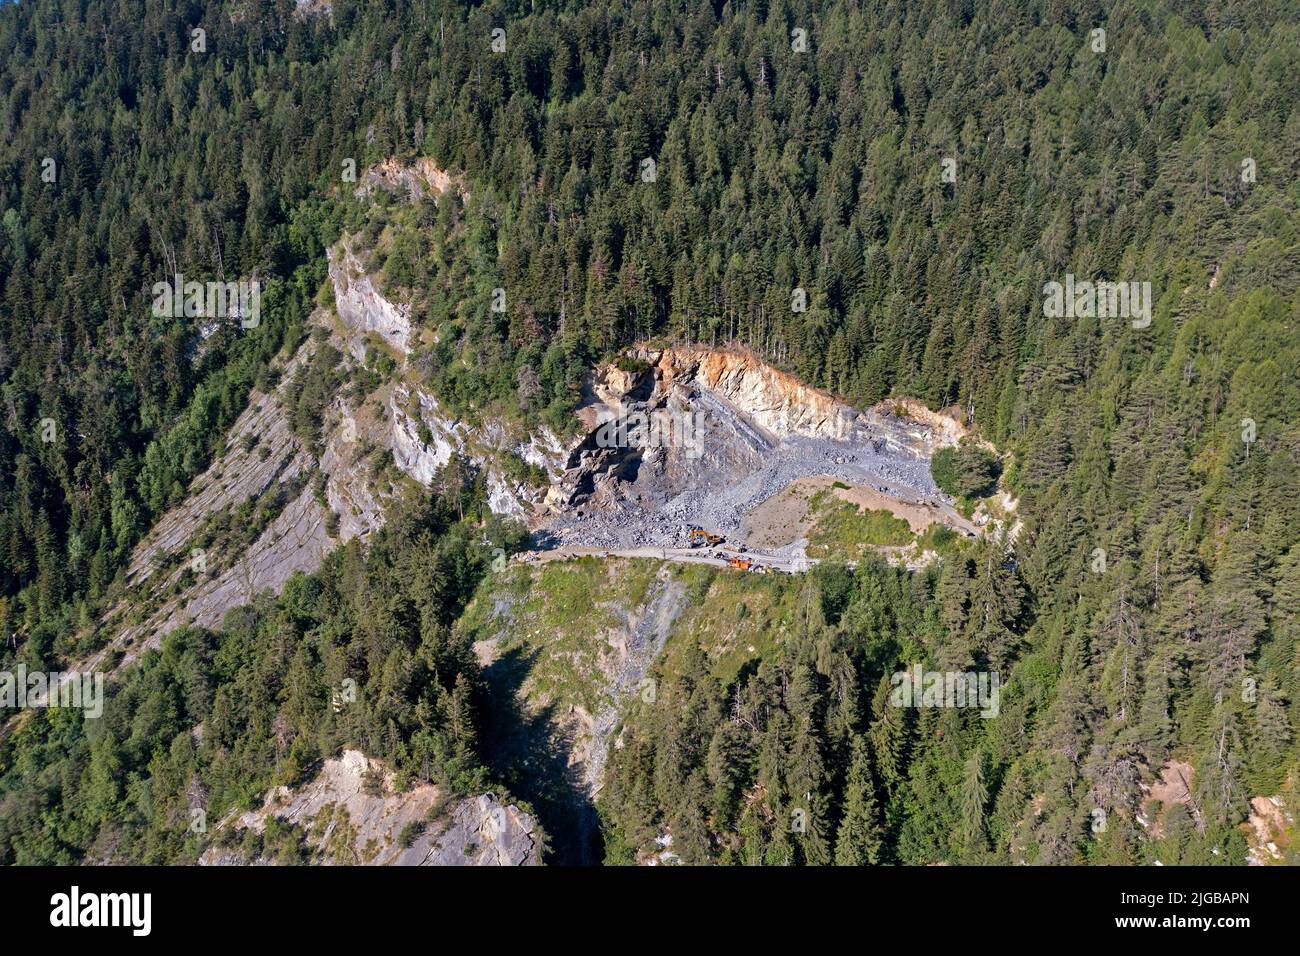 Quarry in a forest, Dugny granite quarry, Leytron, Valais, Switzerland Stock Photo